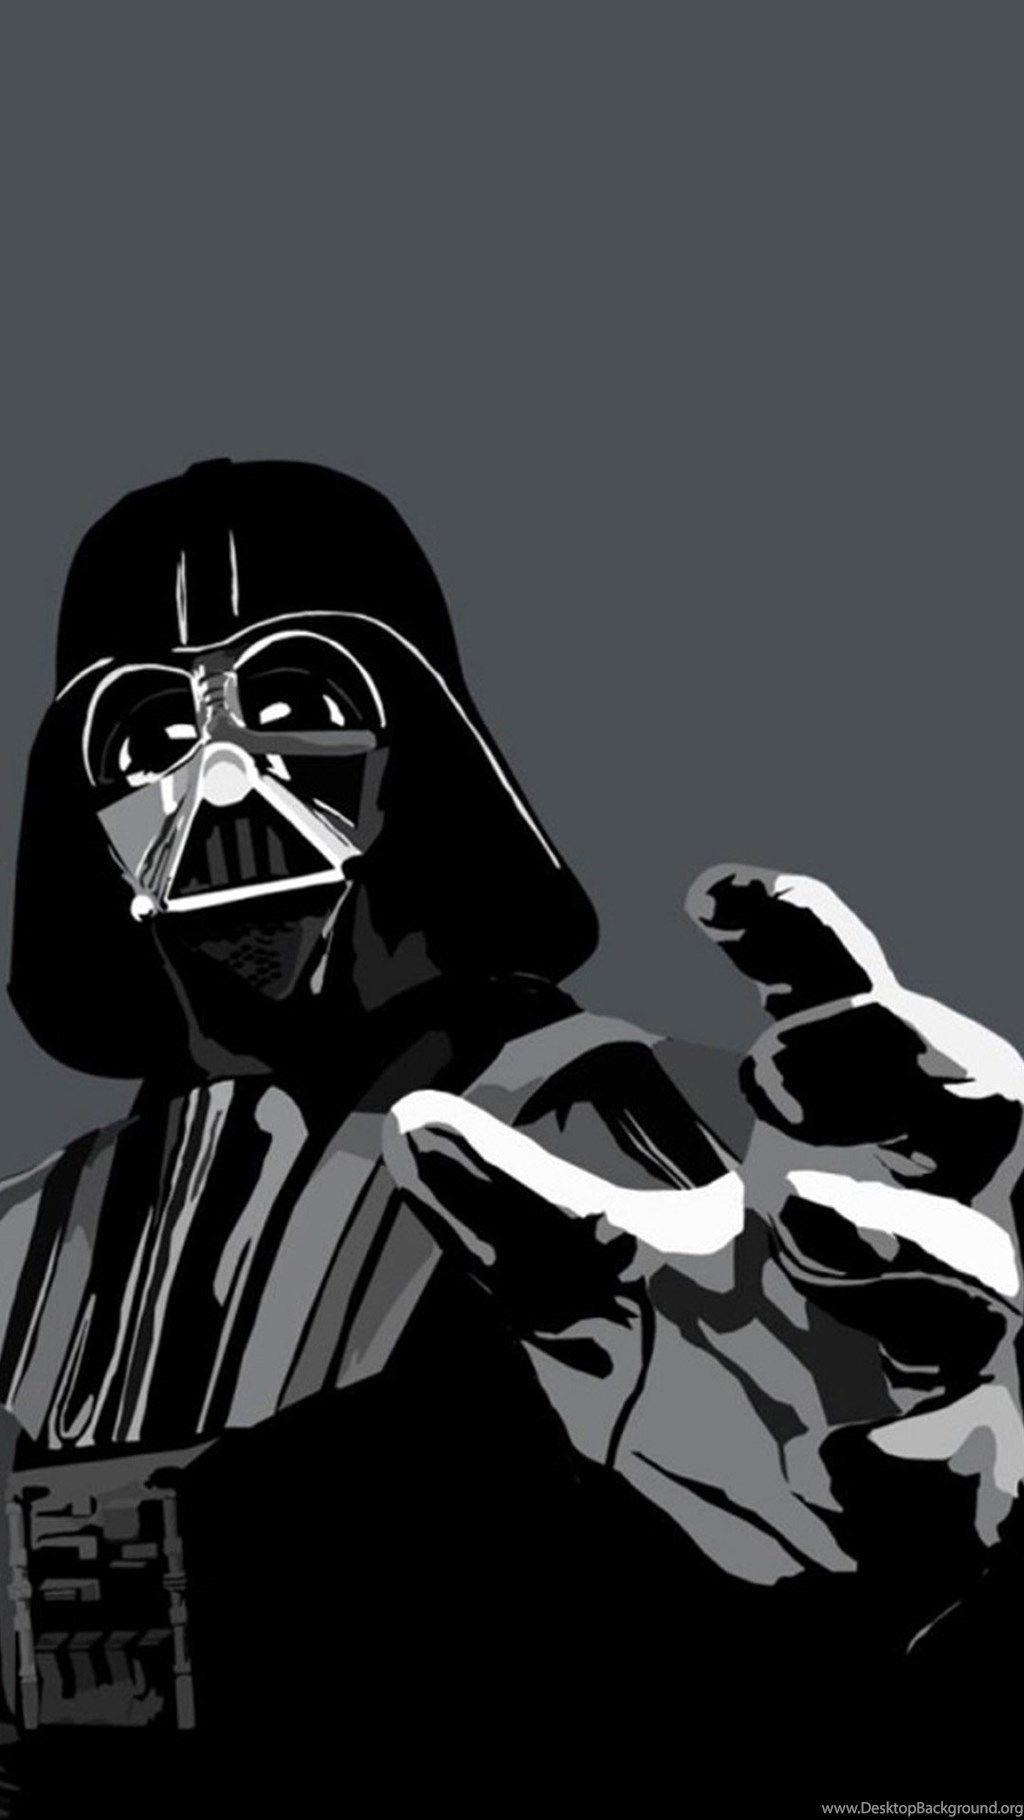 Funny Darth Vader HD Wallpaper iPhone 6 Plus. Desktop Background